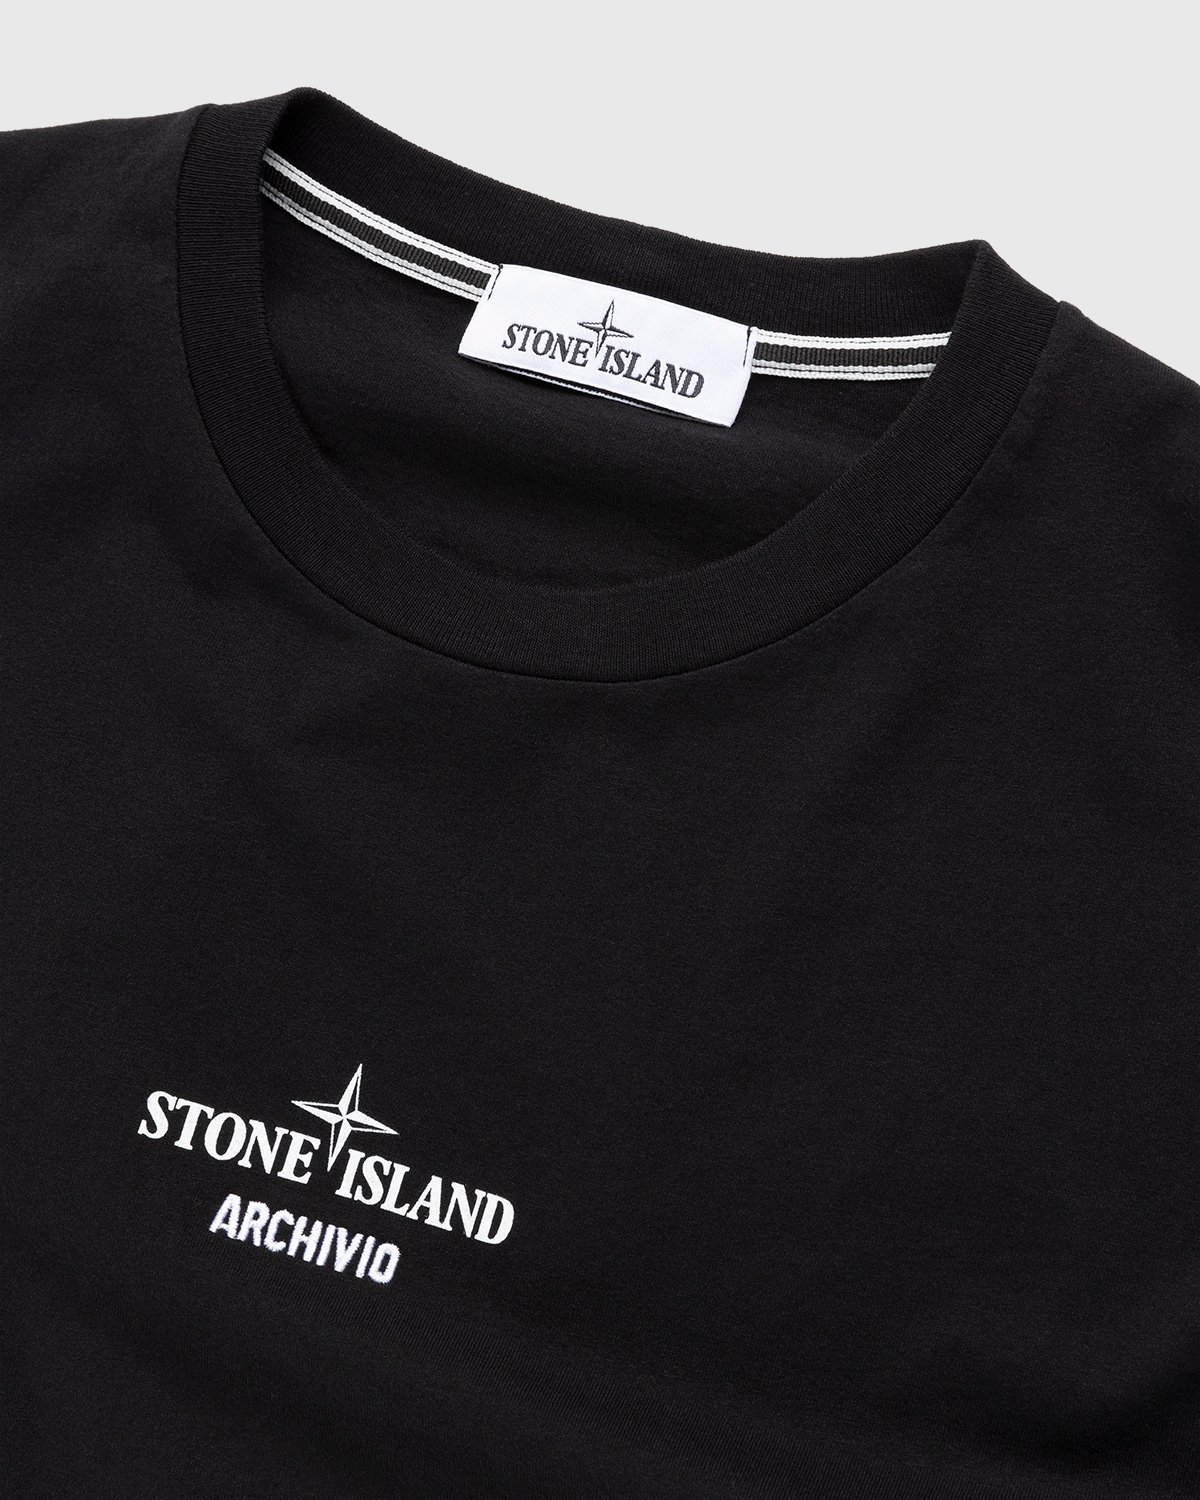 Stone Island - 2NS91 Garment-Dyed Archivio T-Shirt Black - Clothing - Black - Image 6